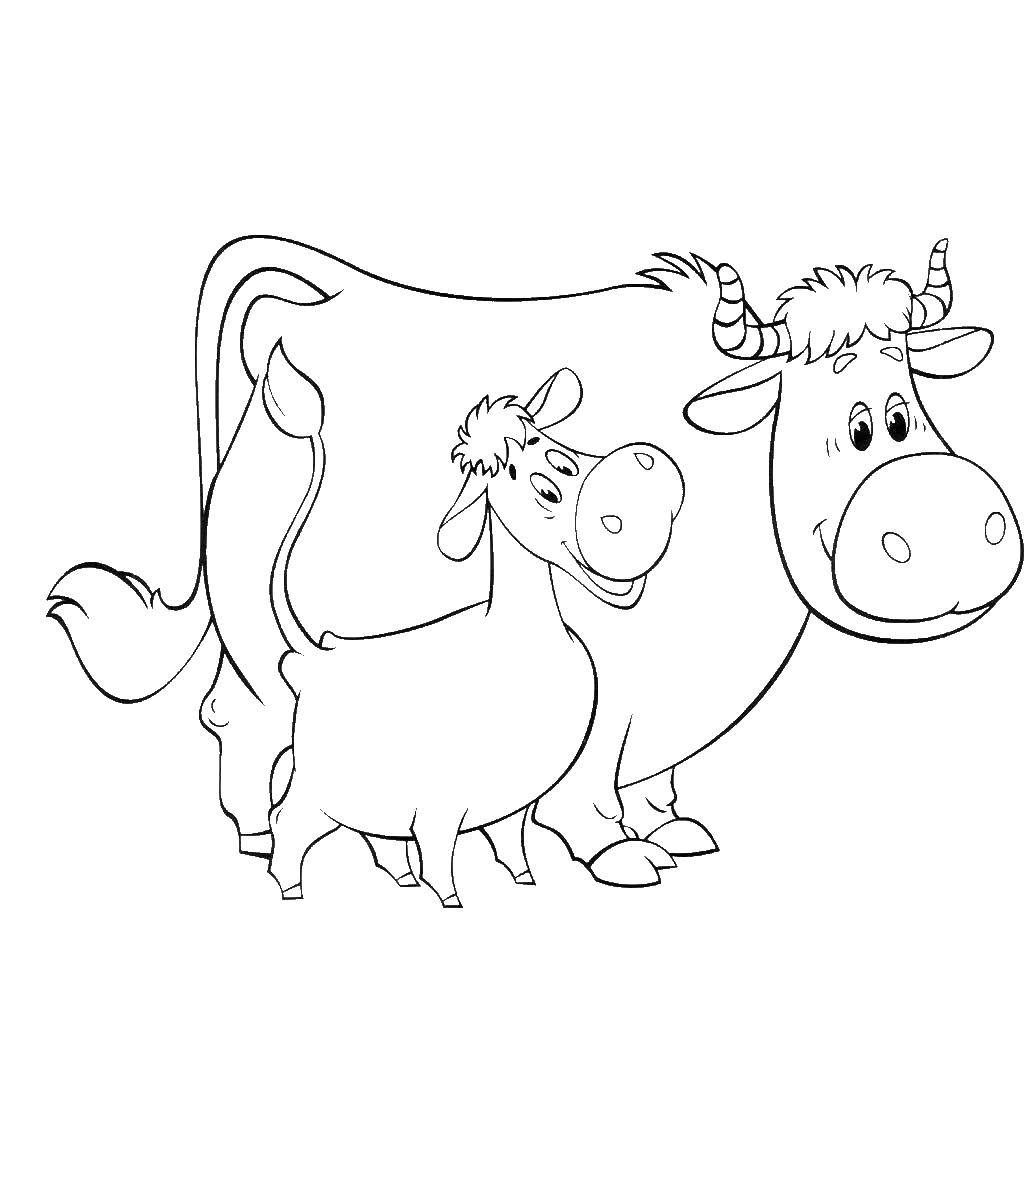 Coloring The cow Murka and calf gavryusha. Category coloring, buttermilk. Tags:  cow Murka, gavryusha calf.